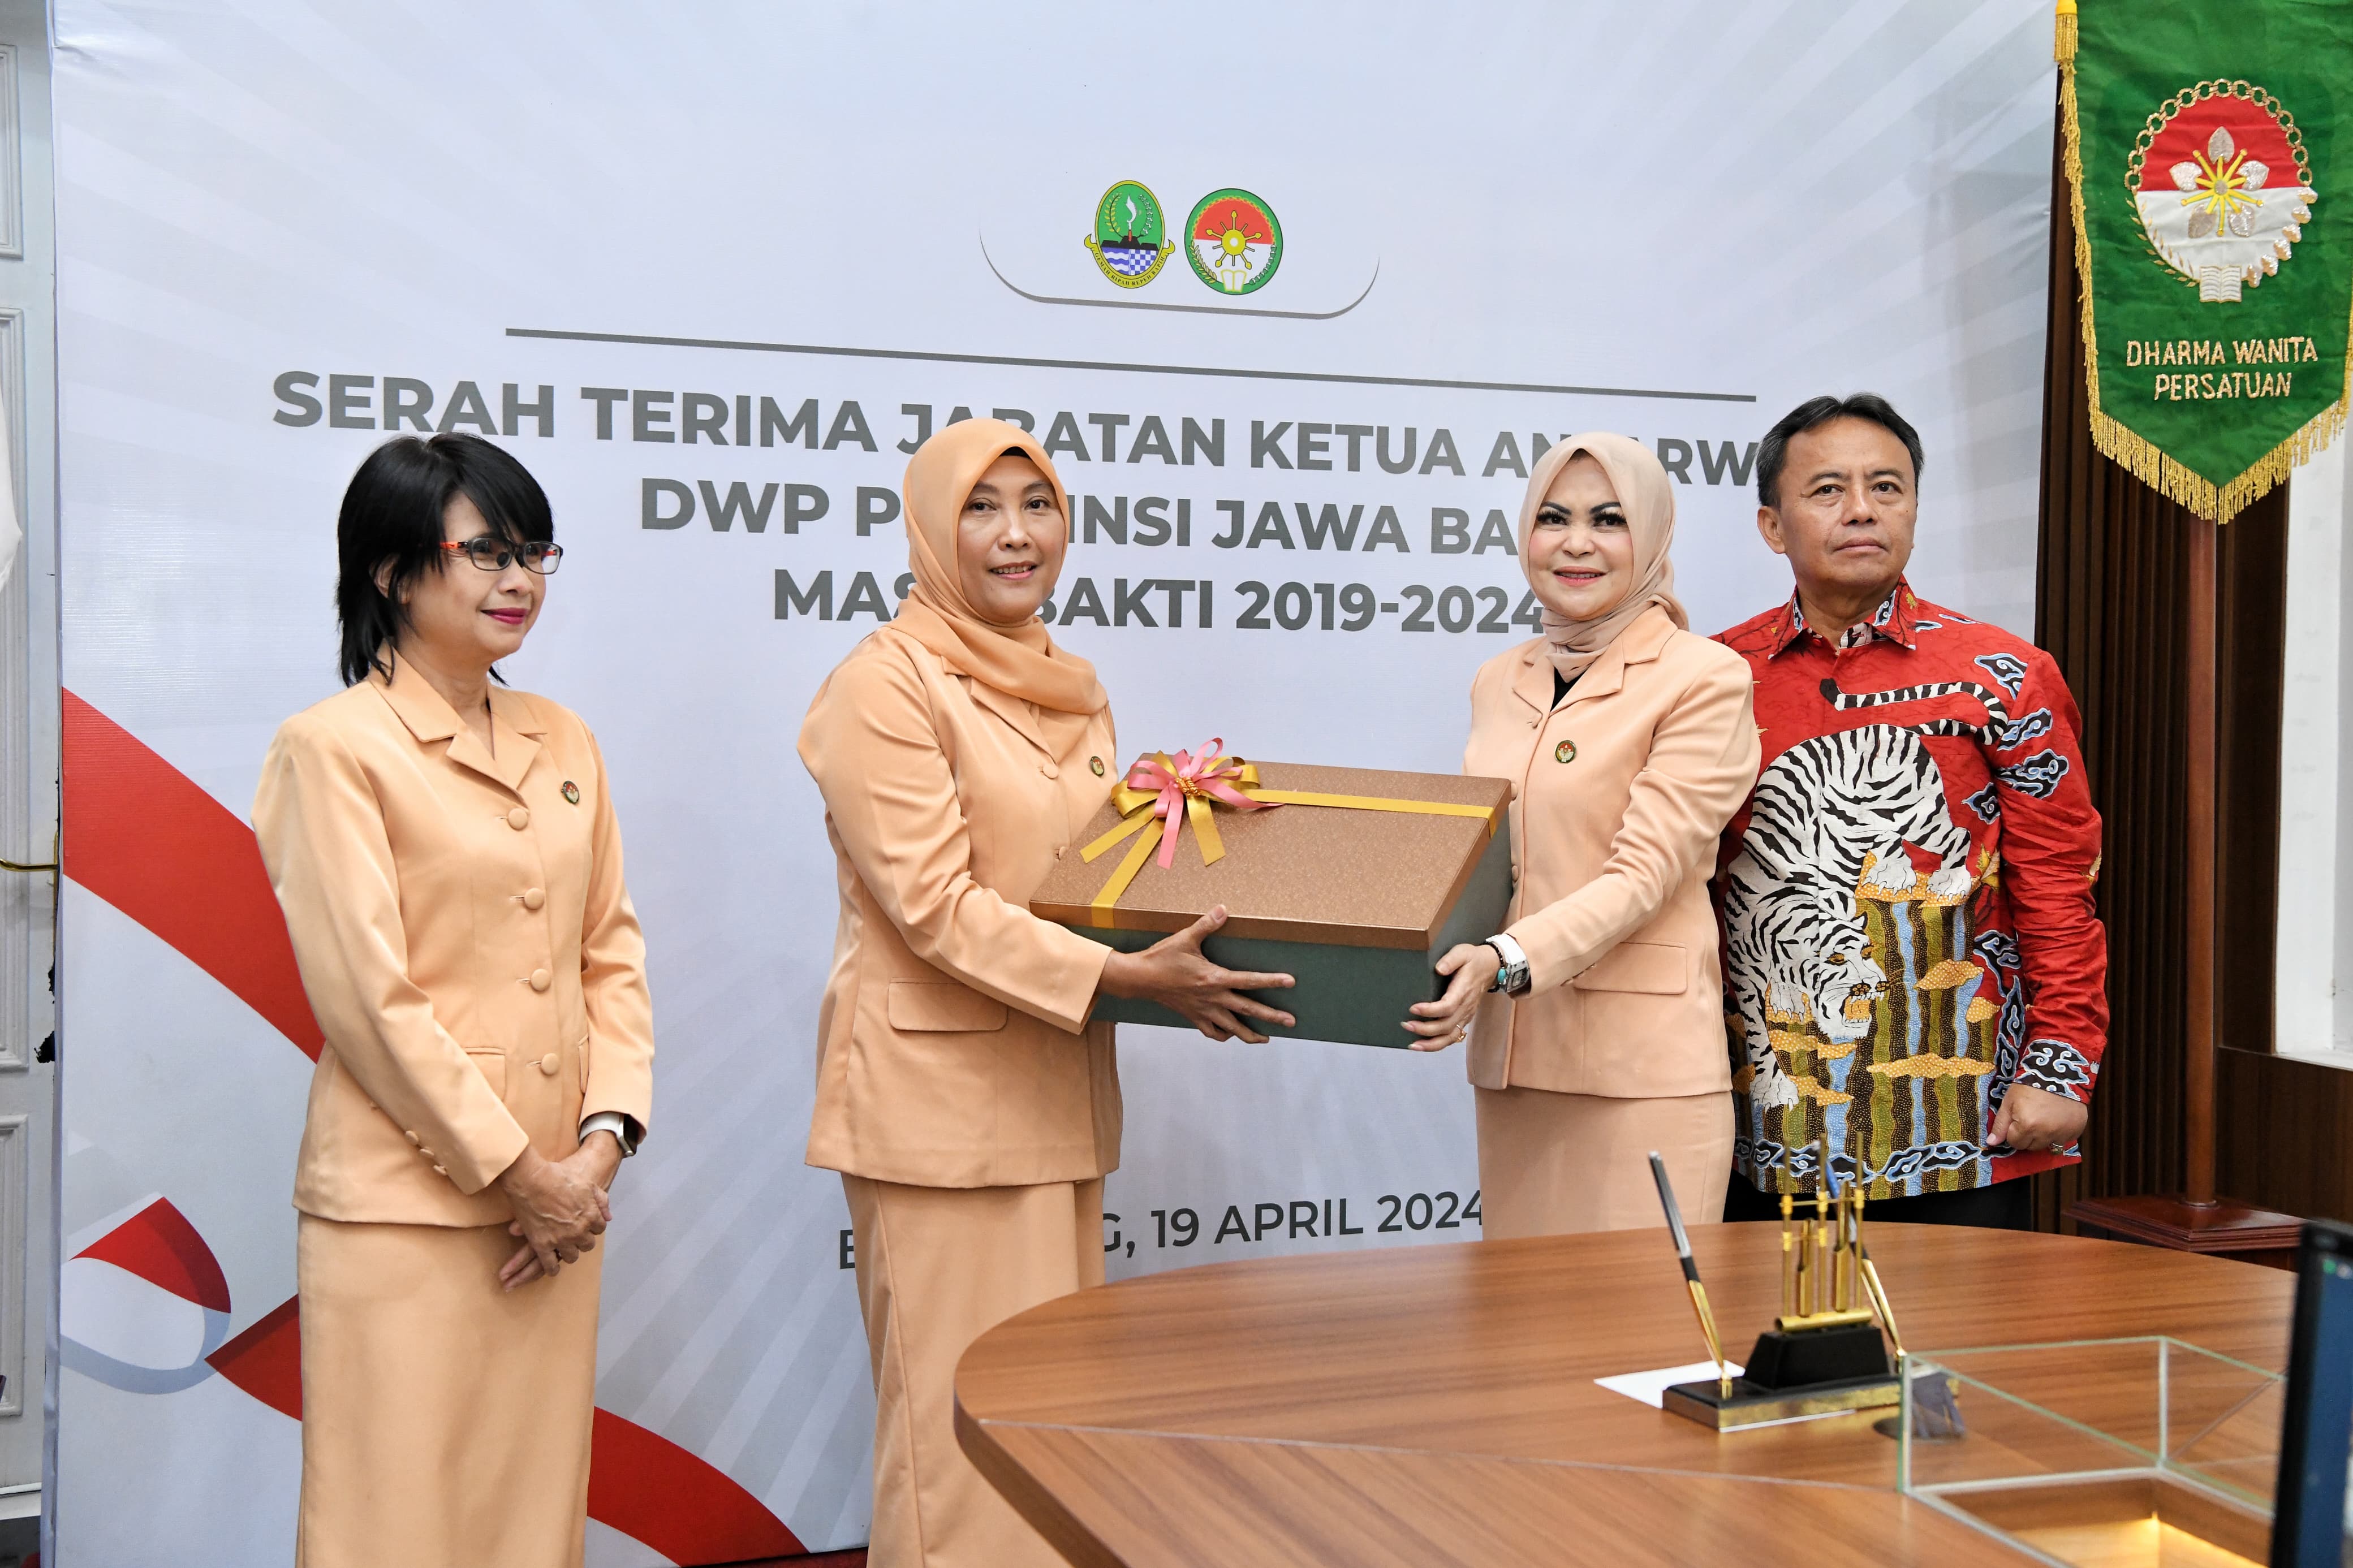 Sekda Jabar Herman Suryatman Hadiri Acara Serah Jabatan Ketua Antarwaktu DWP Jabar